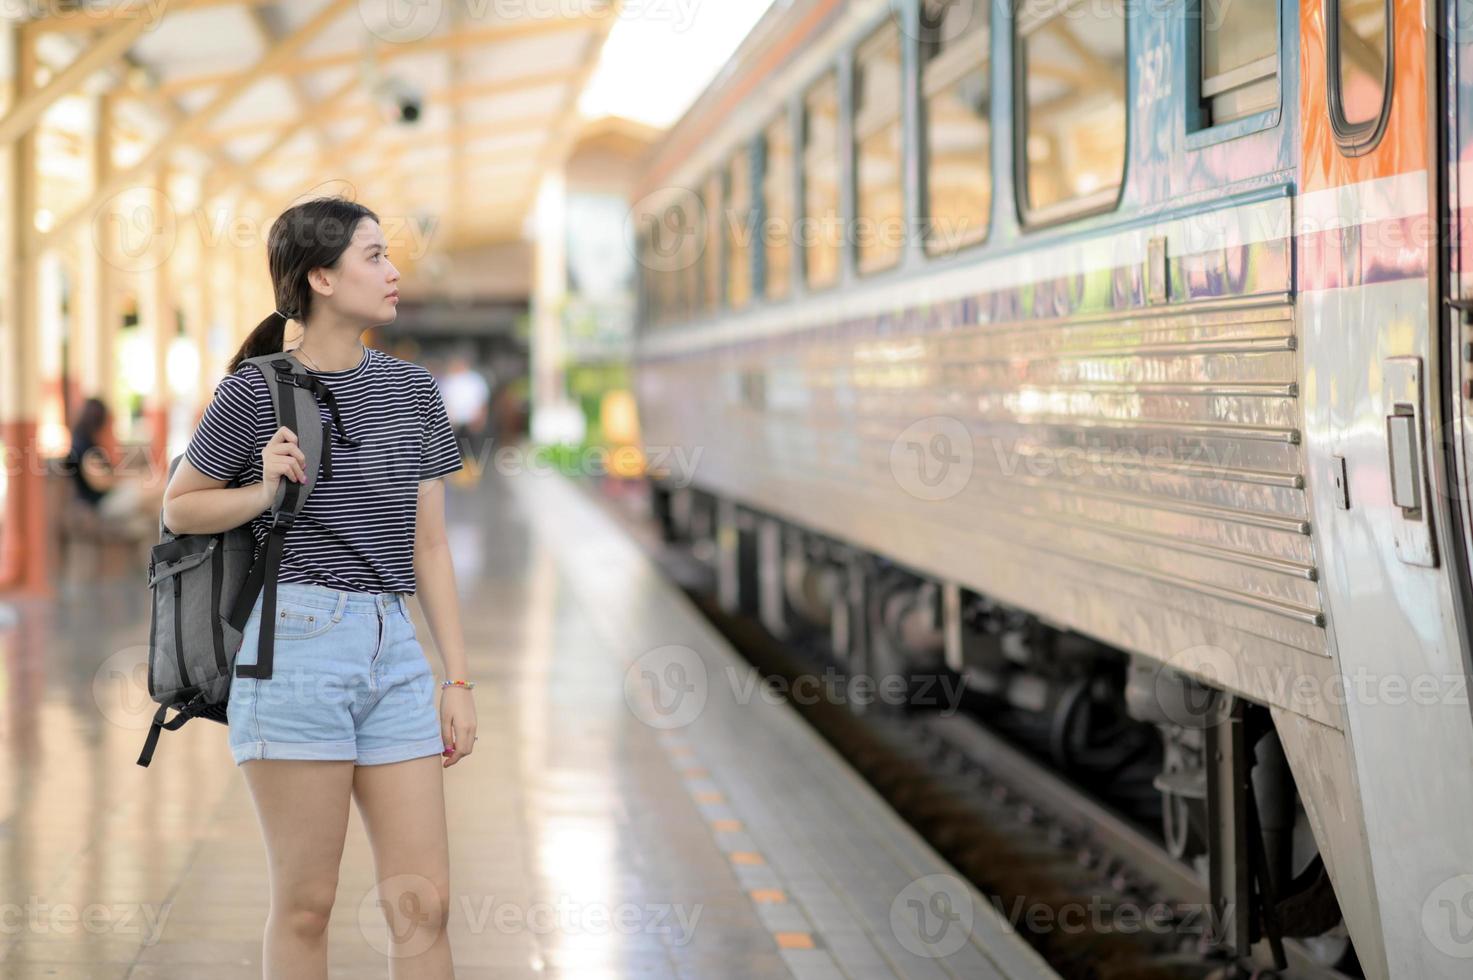 una viajera internacional con una mochila espera el tren. foto